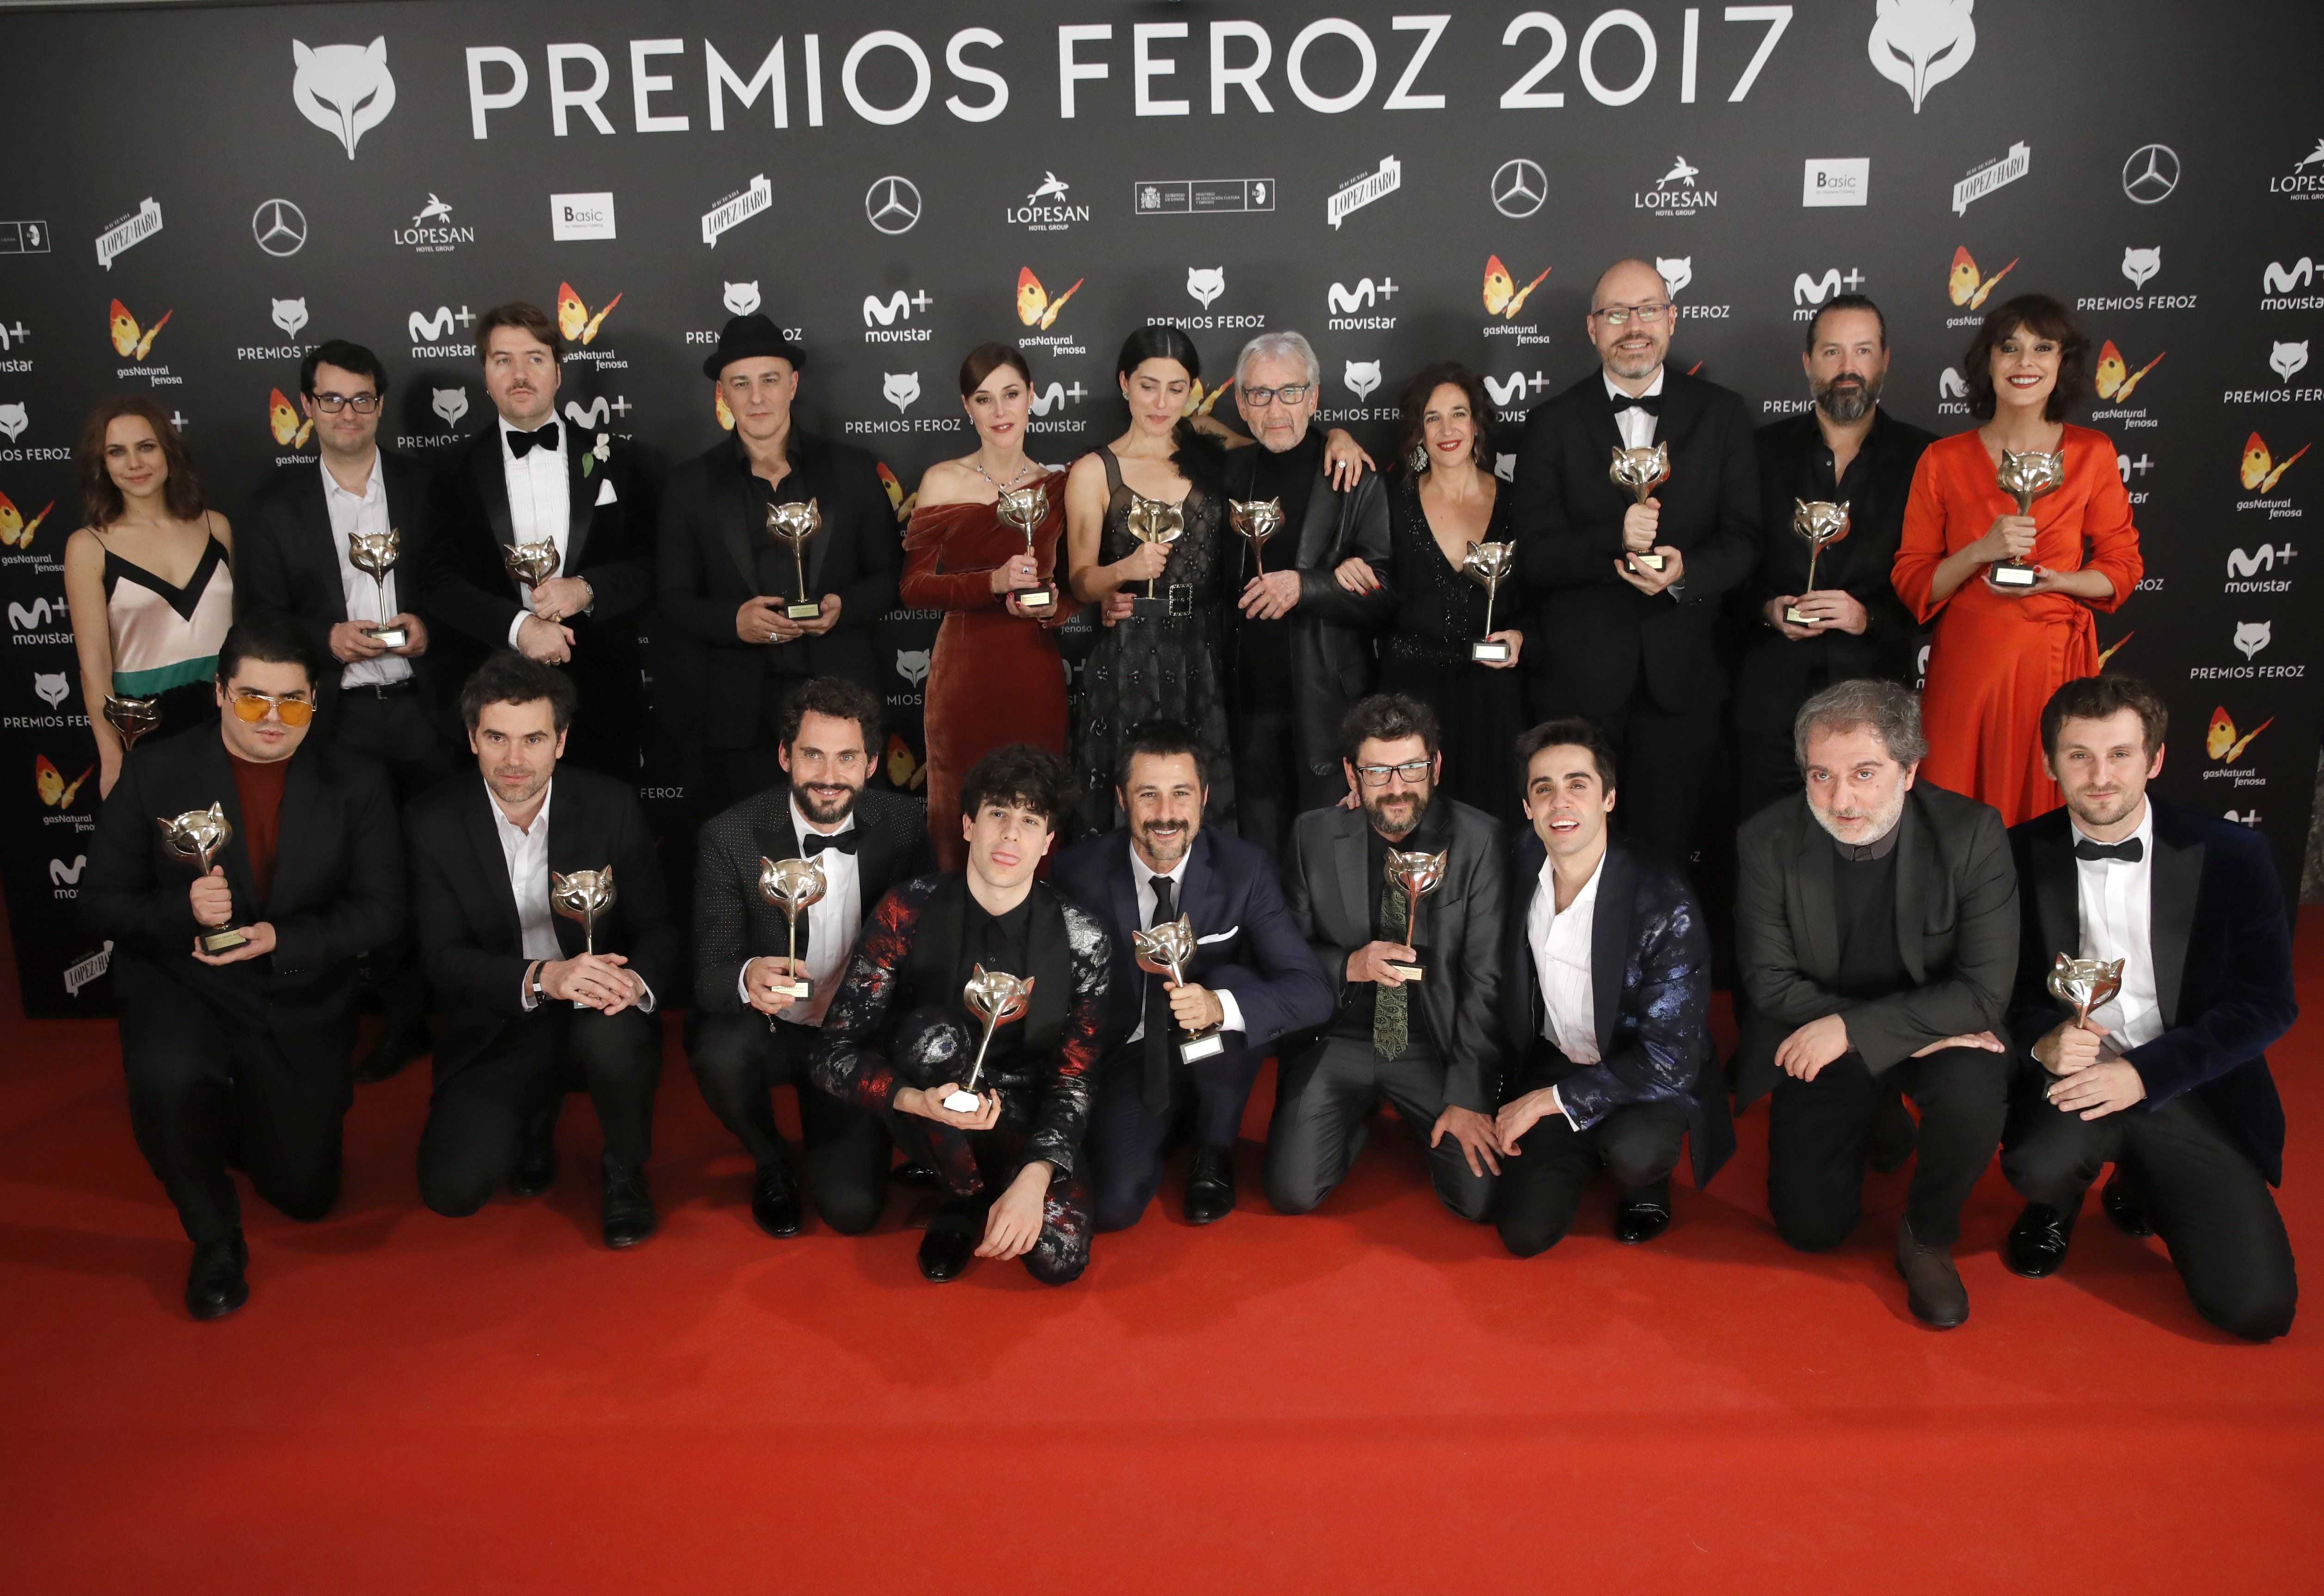 'Tarde para la ira' arrasa en los Premios Feroz de la prensa